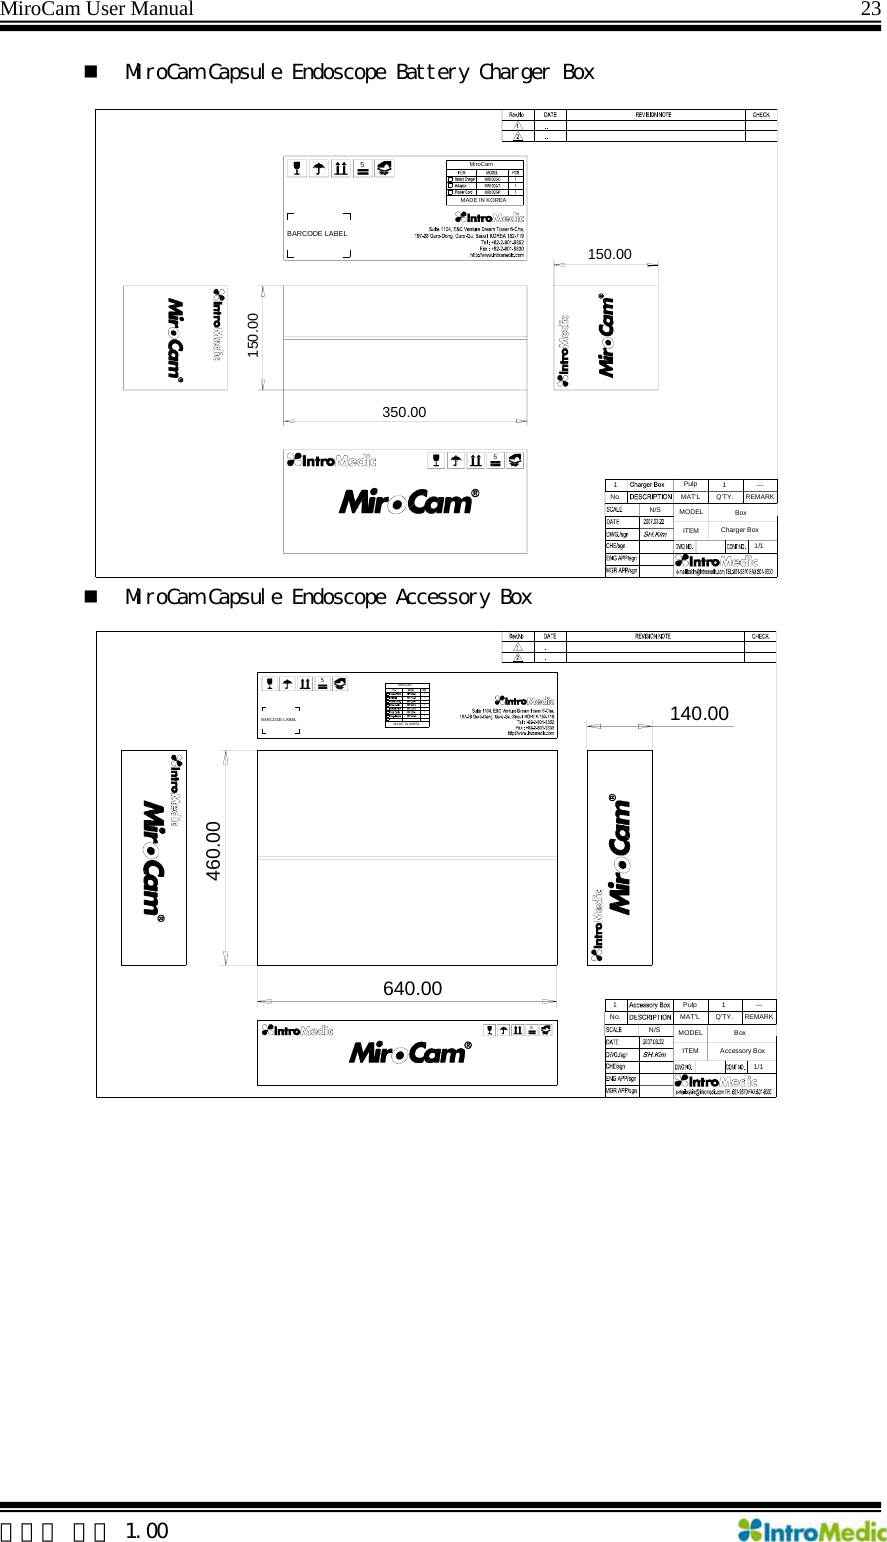 MiroCam User Manual                                                                23  MiroCam Capsule Endoscope Battery Charger Box  MiroCam Capsule Endoscope Accessory Box  5MiroCamMADE IN KOREA350.00150.00150.00REMARK---1Q&apos;TY.1/1BoxCharger BoxMAT&apos;LPulp1No.ITEMN/S MODELBARCODE LABEL55MiroCamMADE IN KOREAREMARK---1Q&apos;TY.1/1BoxAccessory BoxMAT&apos;LPulp1No.ITEMN/S MODELBARCODE LABEL640.00460.00140.005 한글판 버전 1.00 